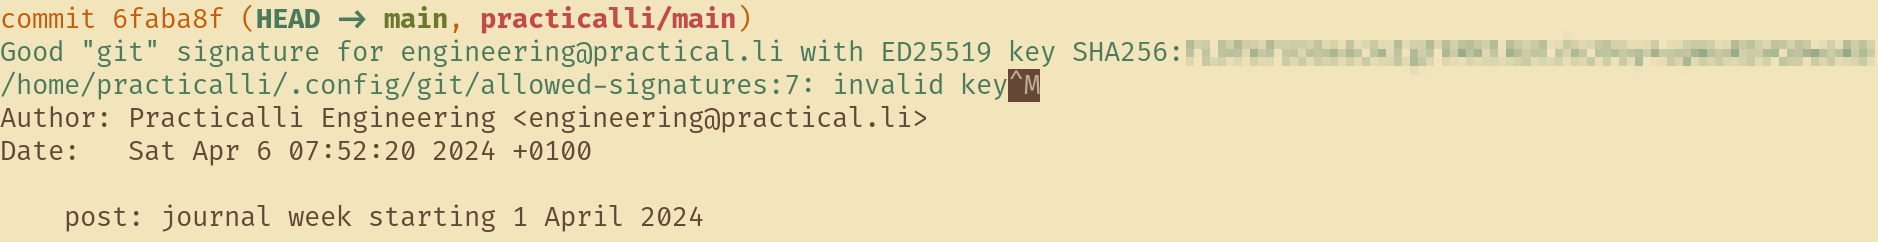 Git log show signatures - error invalid key